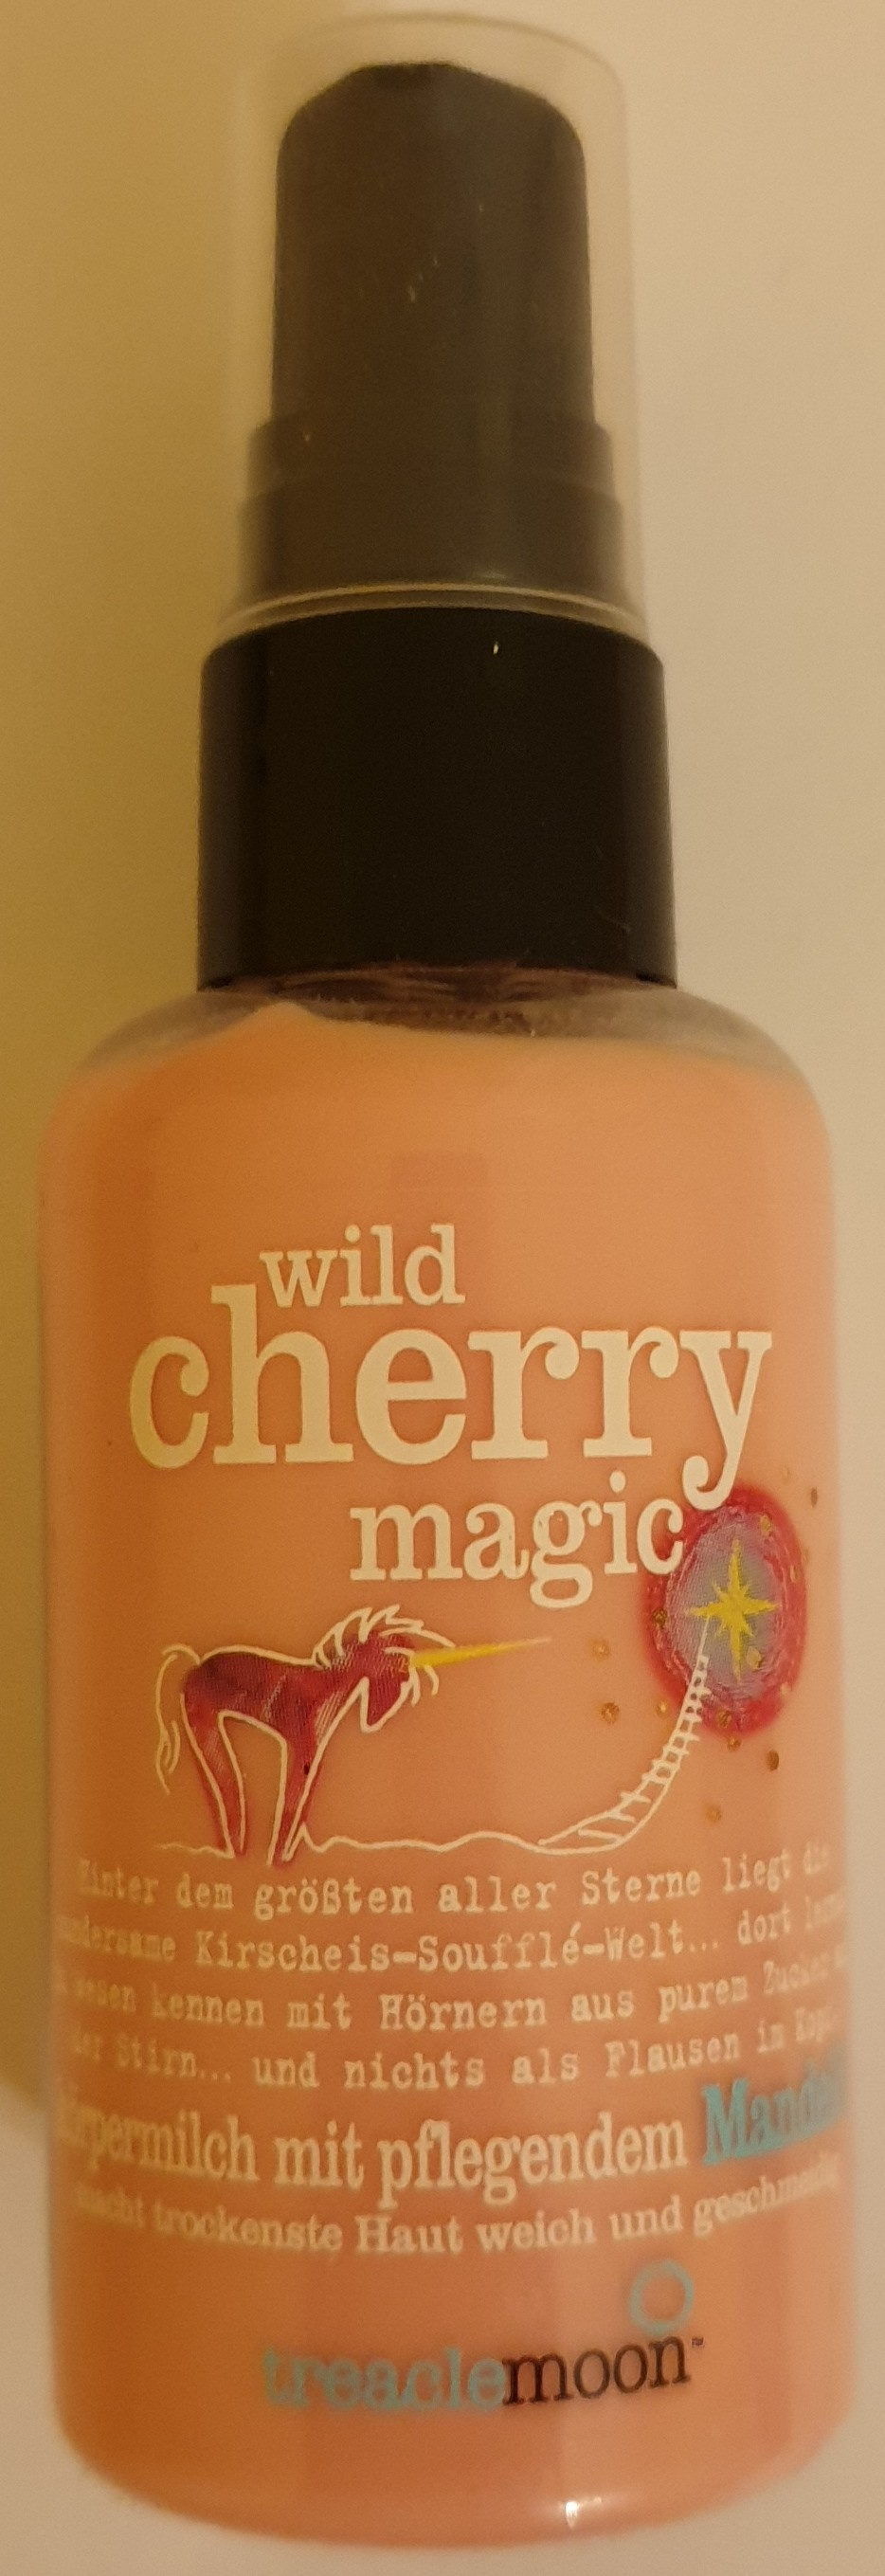 wild cherry magic - Продукт - de